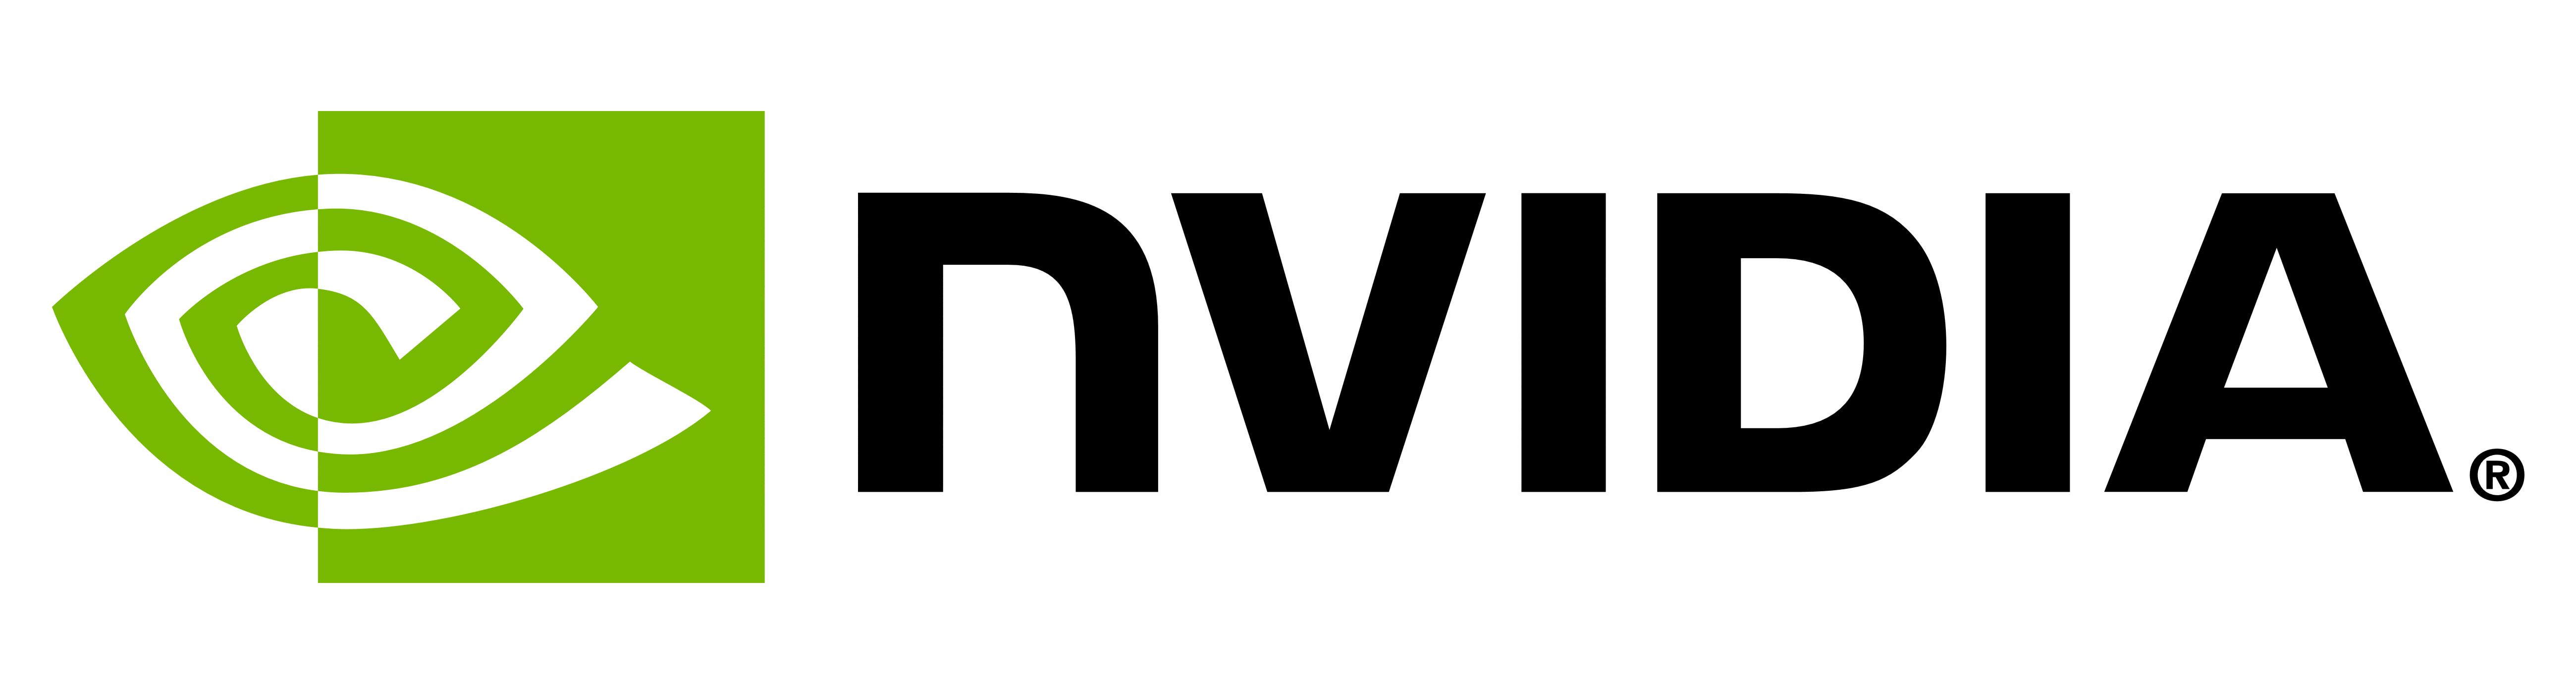 Nvidia Logo GEForce Transparent Image